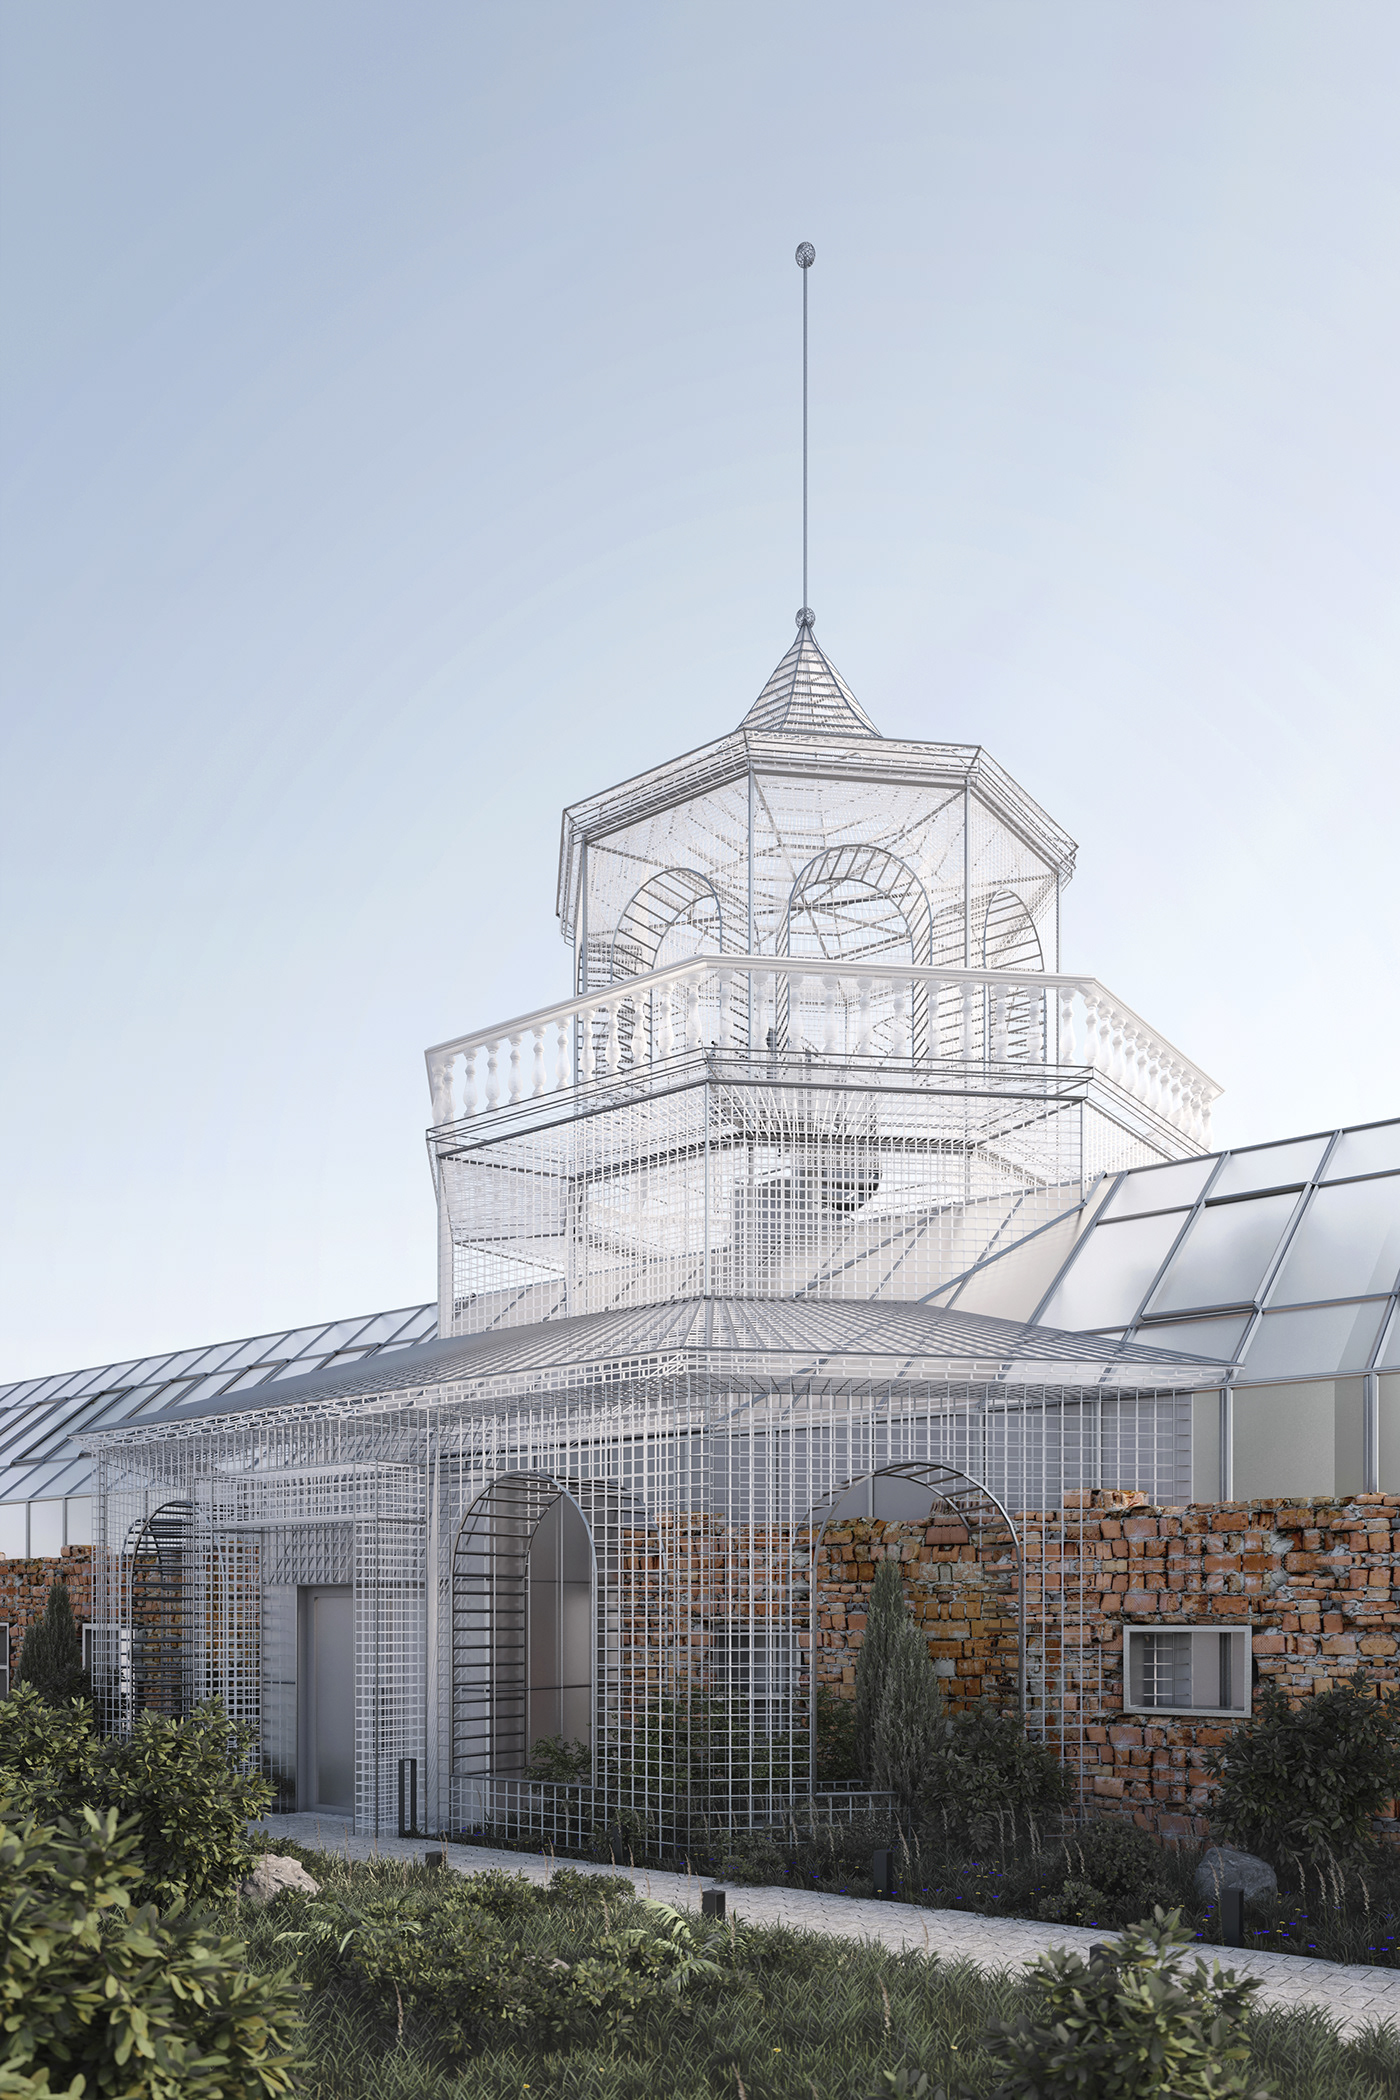 3ds max architecture corona exterior greenhouse interior design  Render visualization warehouse wine